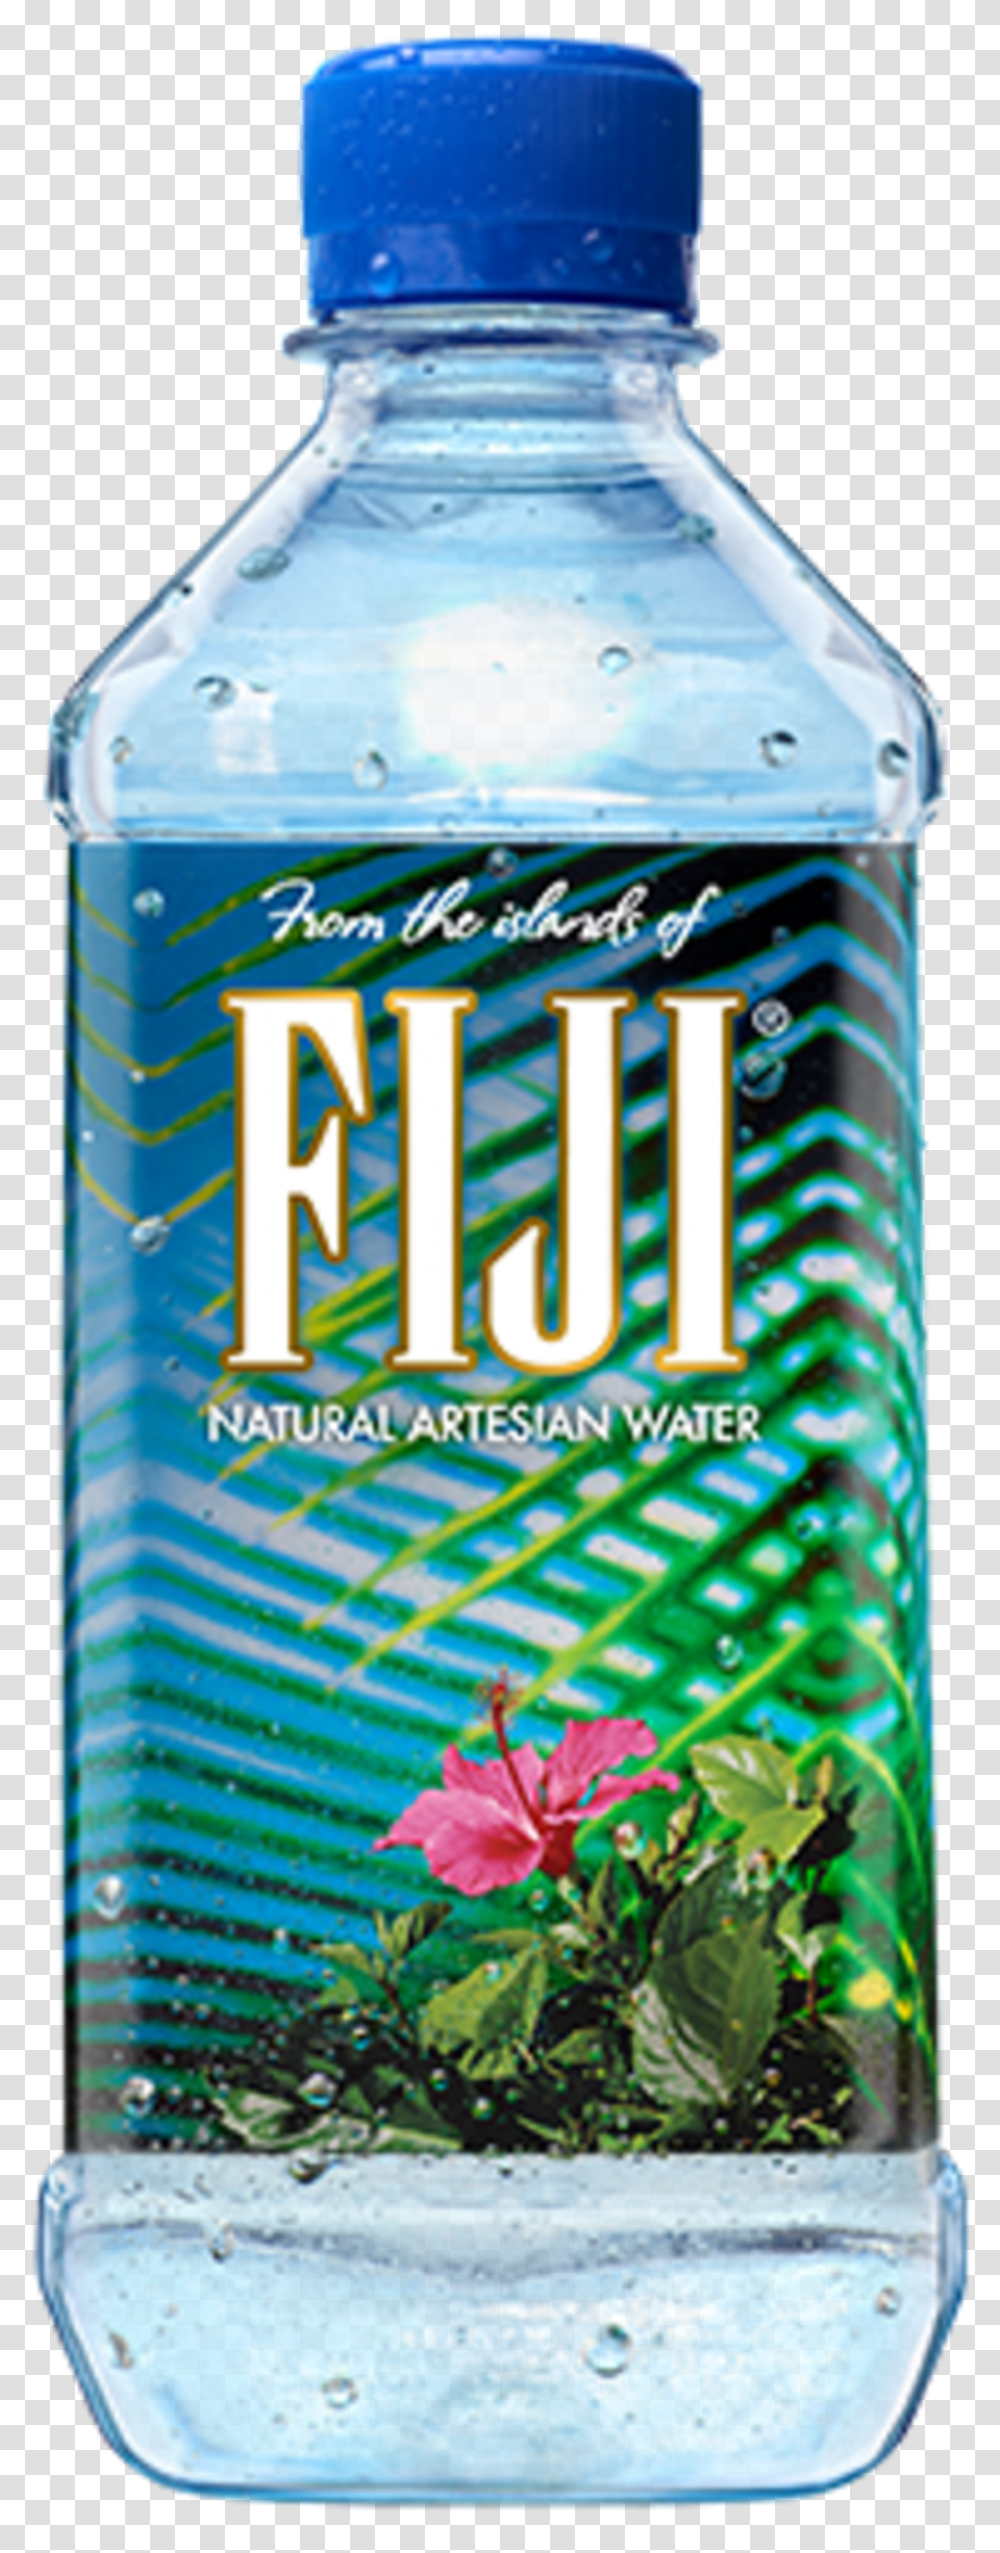 Fiji Water Bottle Fiji Water Bottle Transparent Png